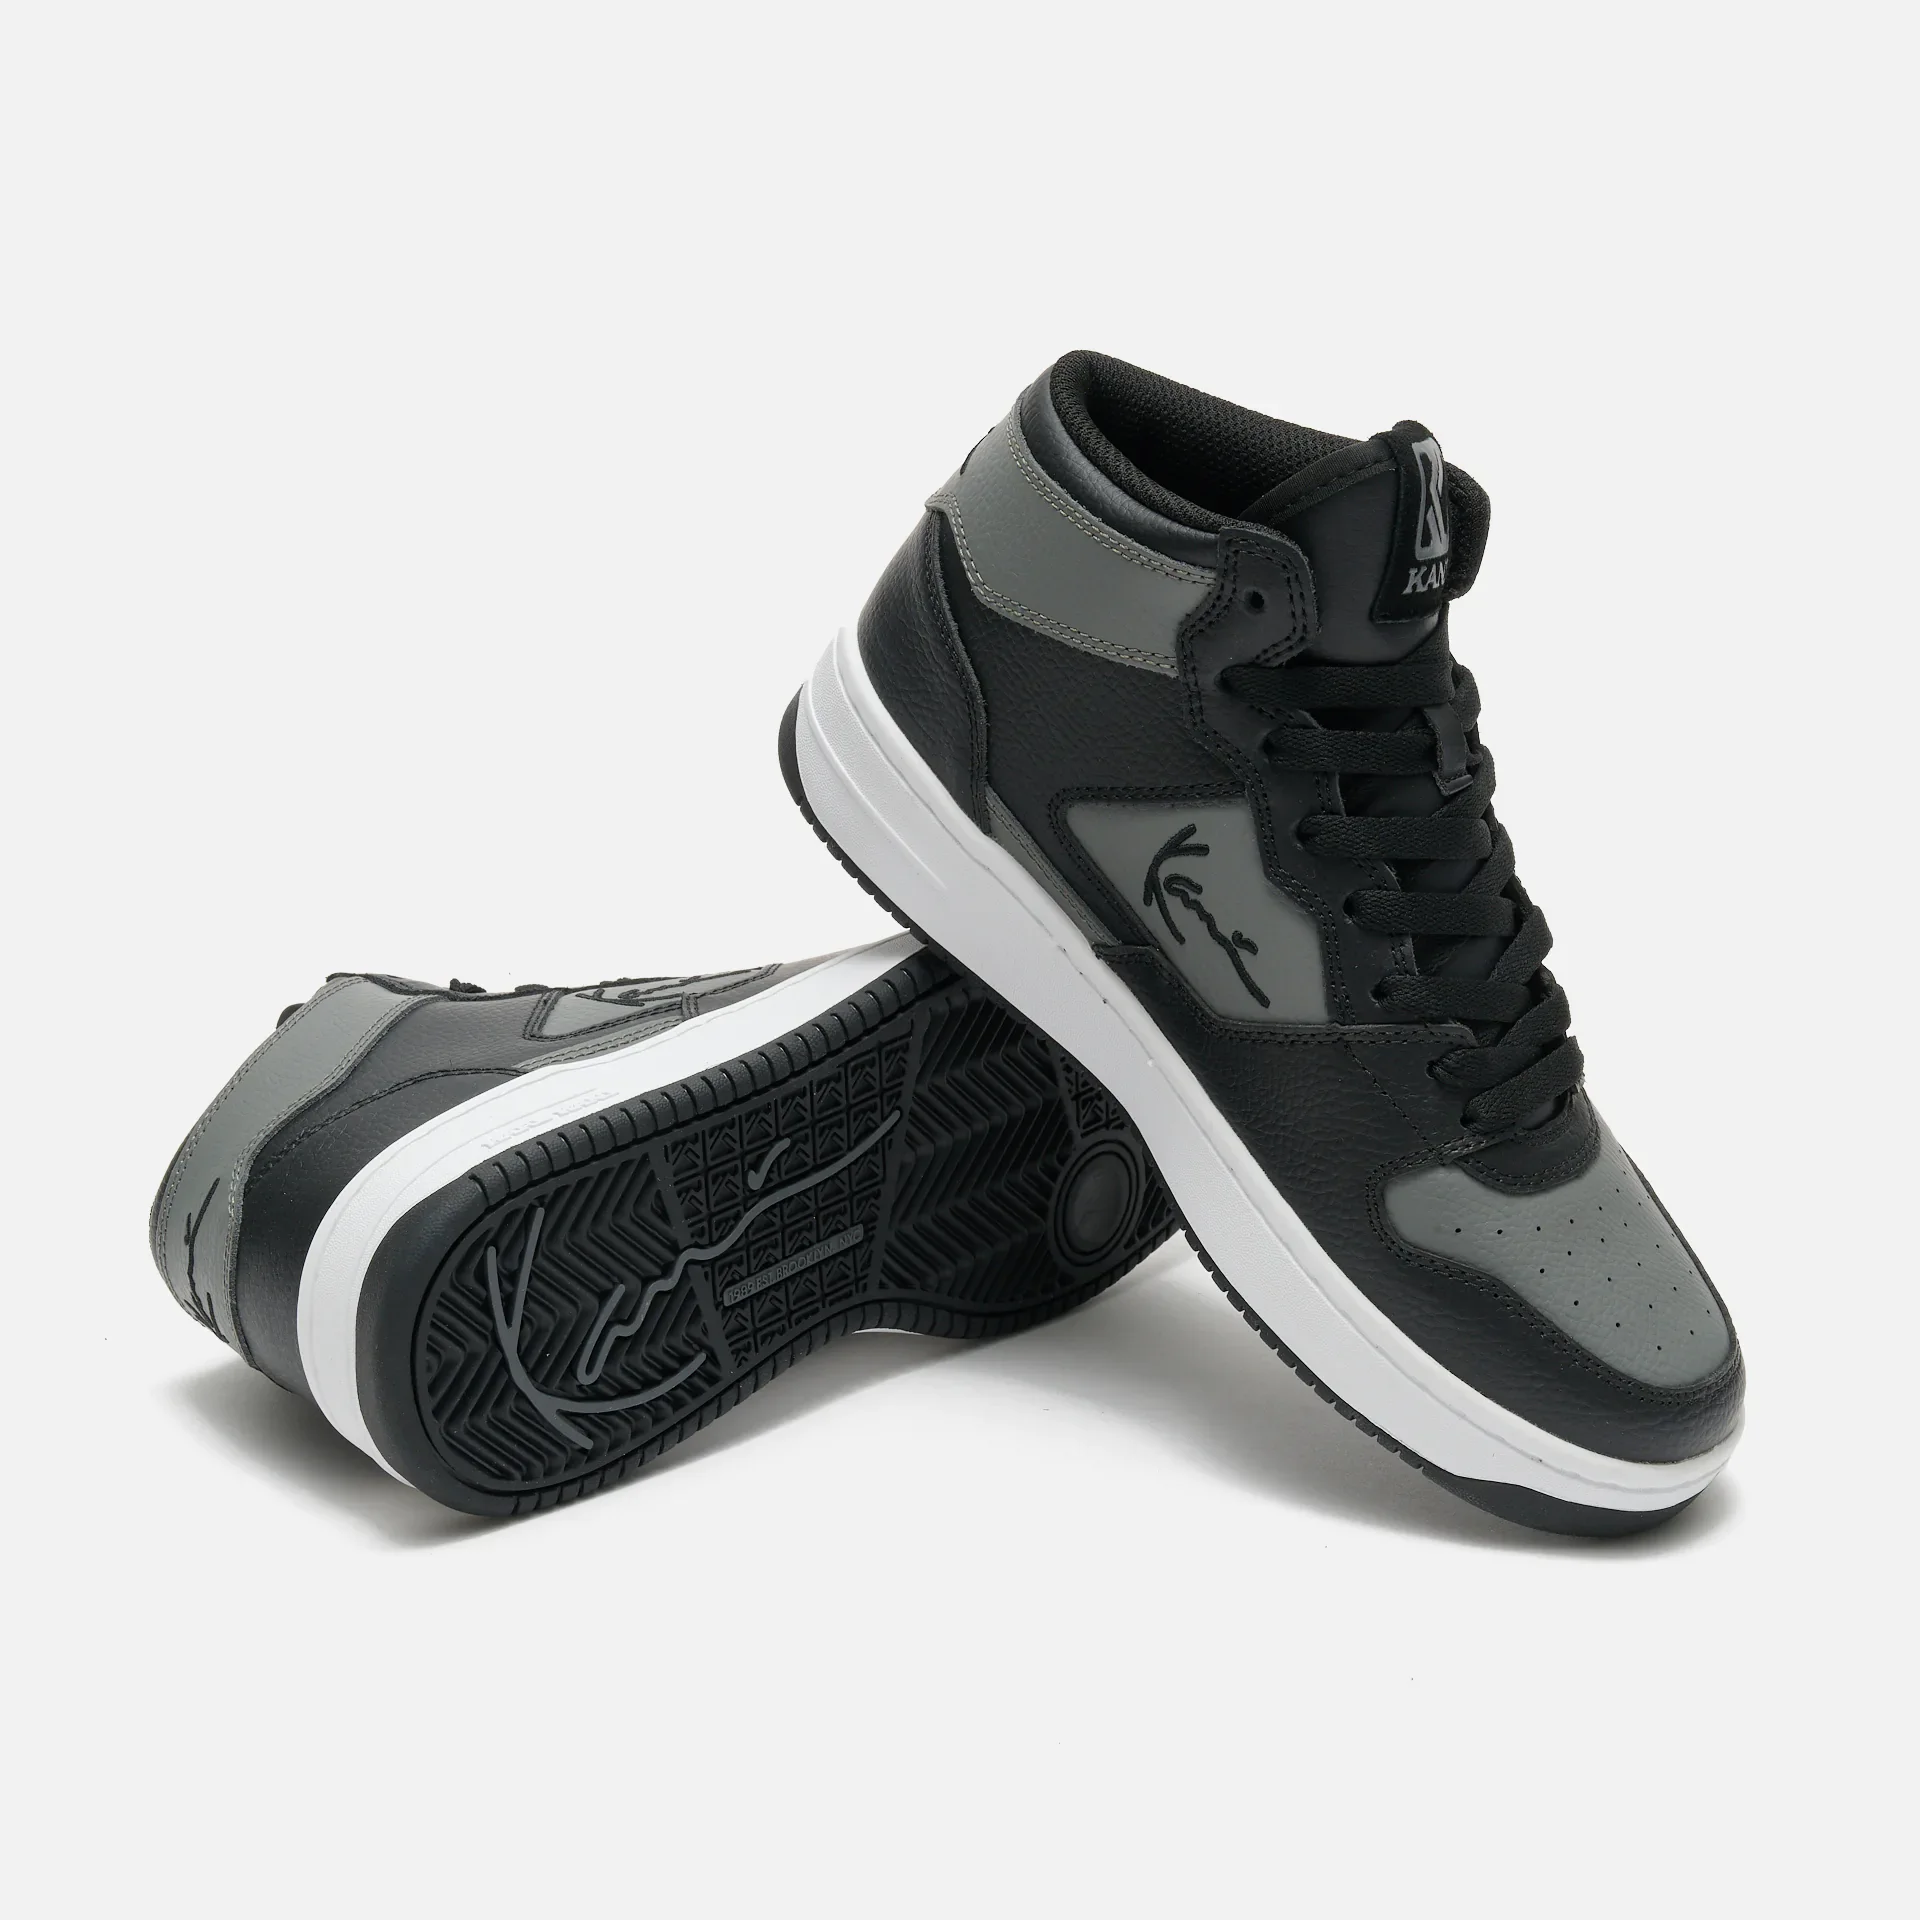 Karl Kani 89 High Premium Sneakers Black/Grey